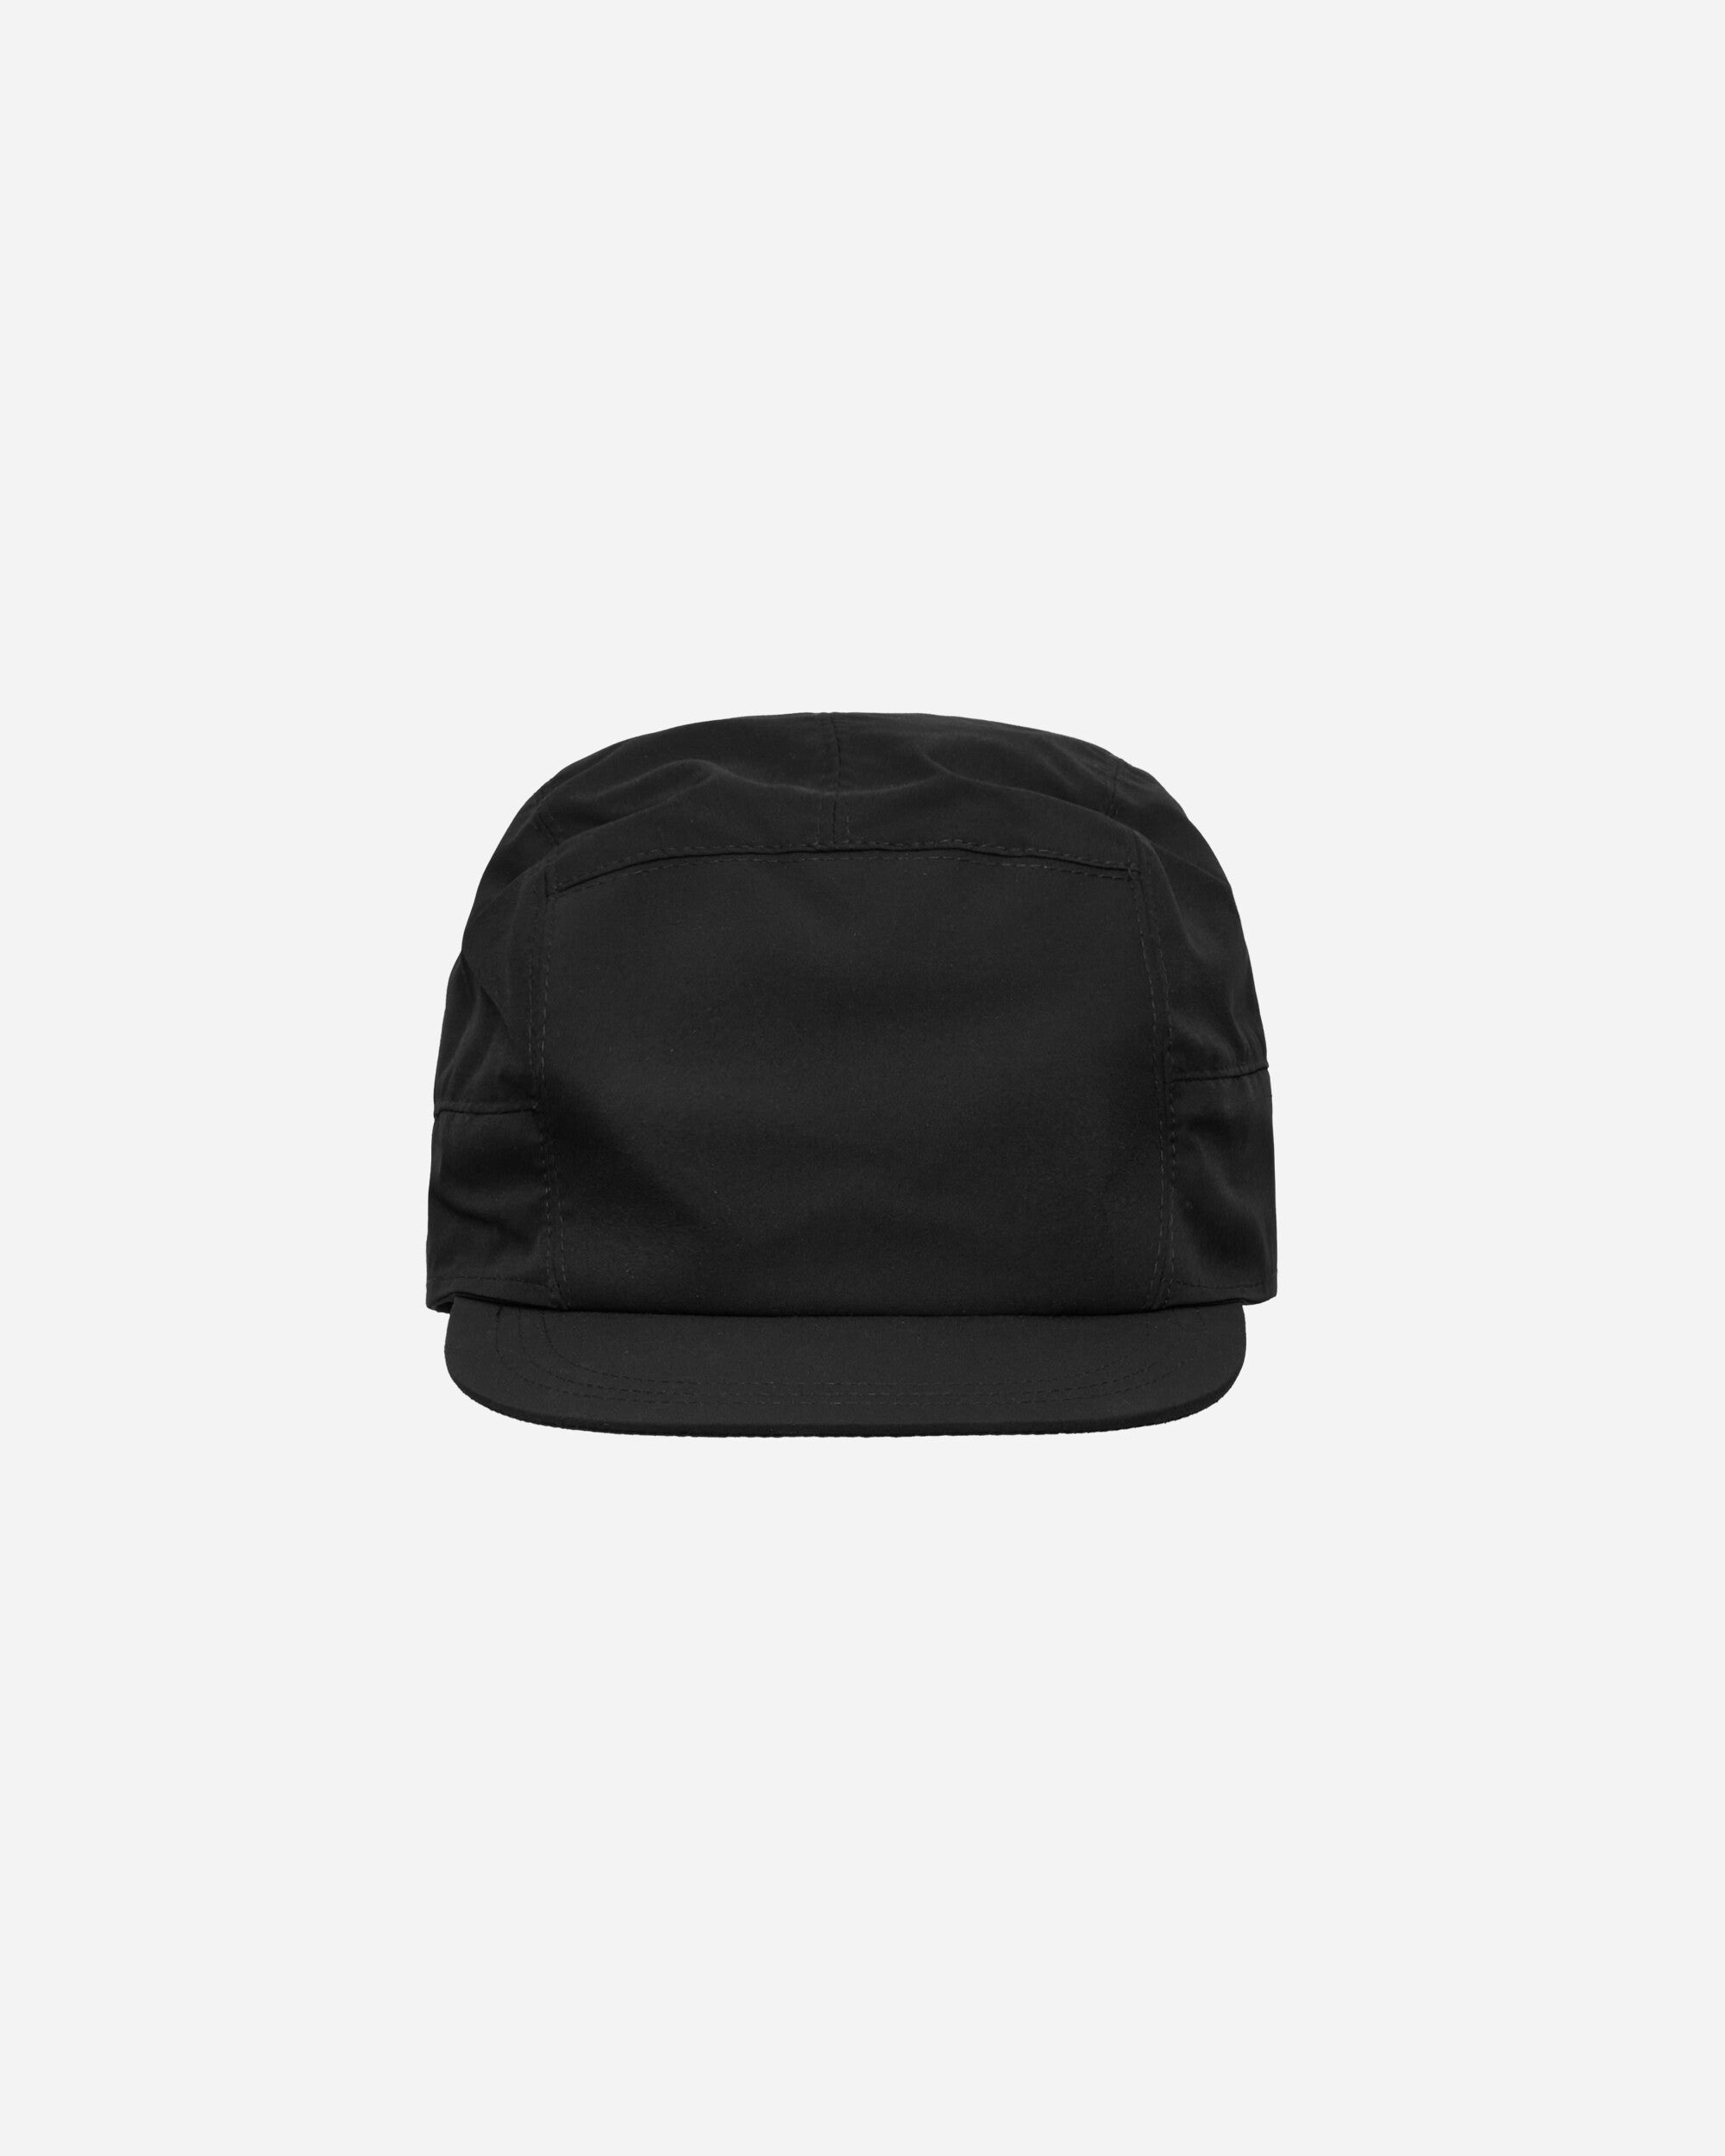 Veiled Cap Black - 5